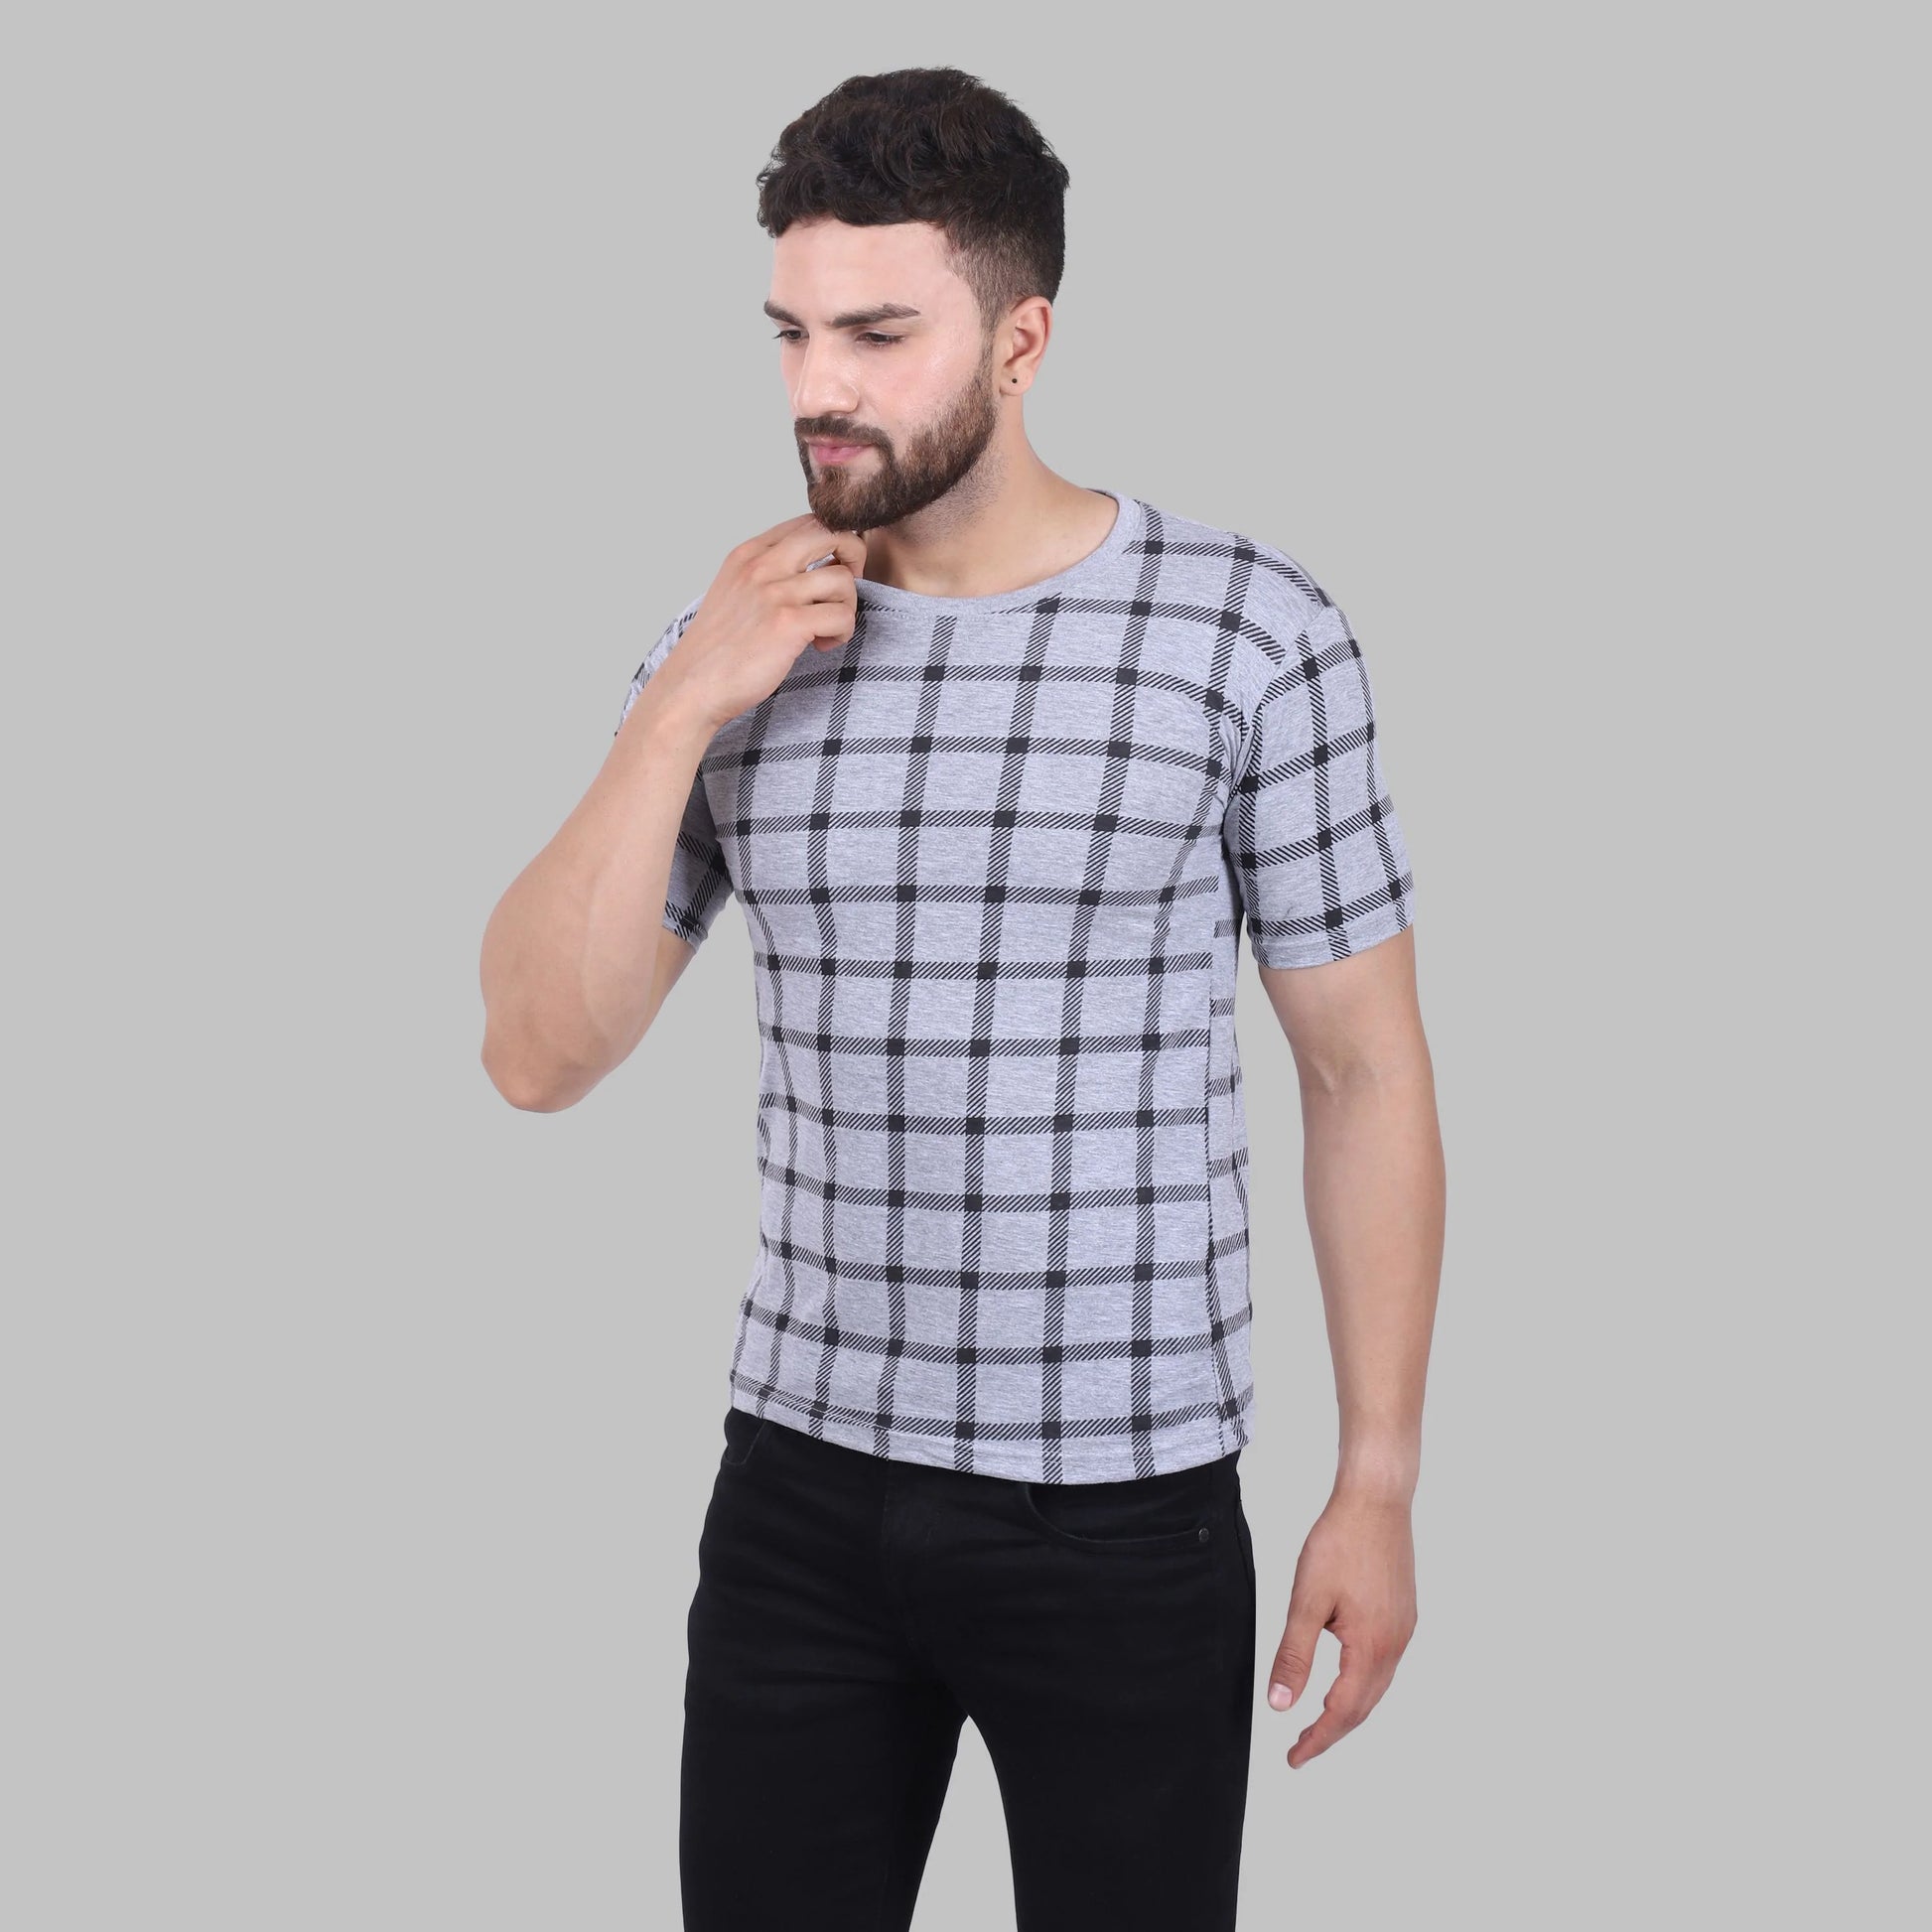 Fleximaa Men's Cotton Printed Round Neck Half Sleeve T-Shirt - fleximaa-so